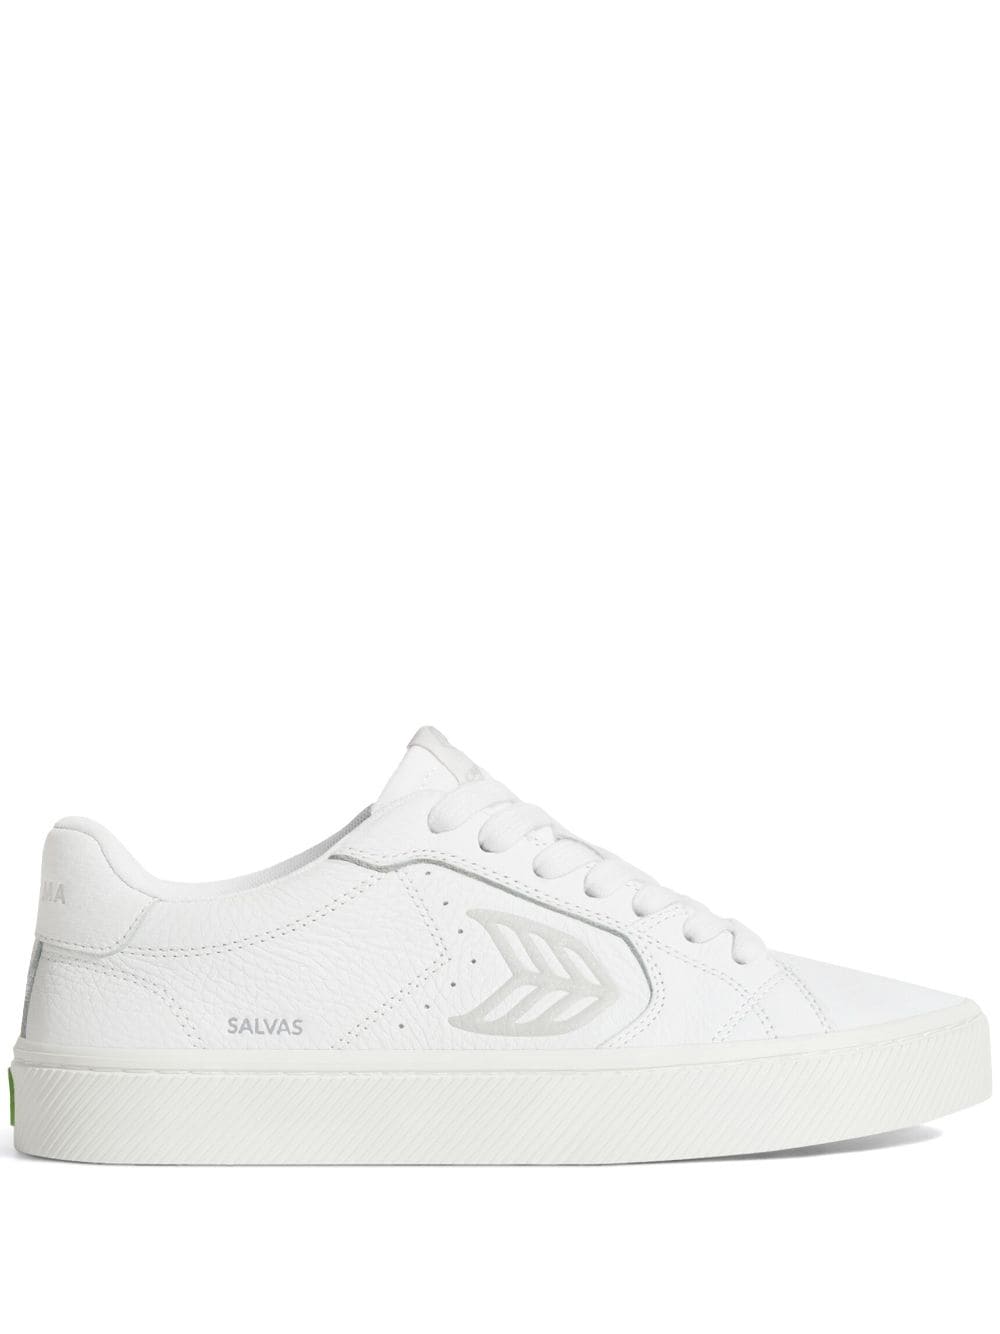 Cariuma Salvas Low-top Leather Sneakers In White